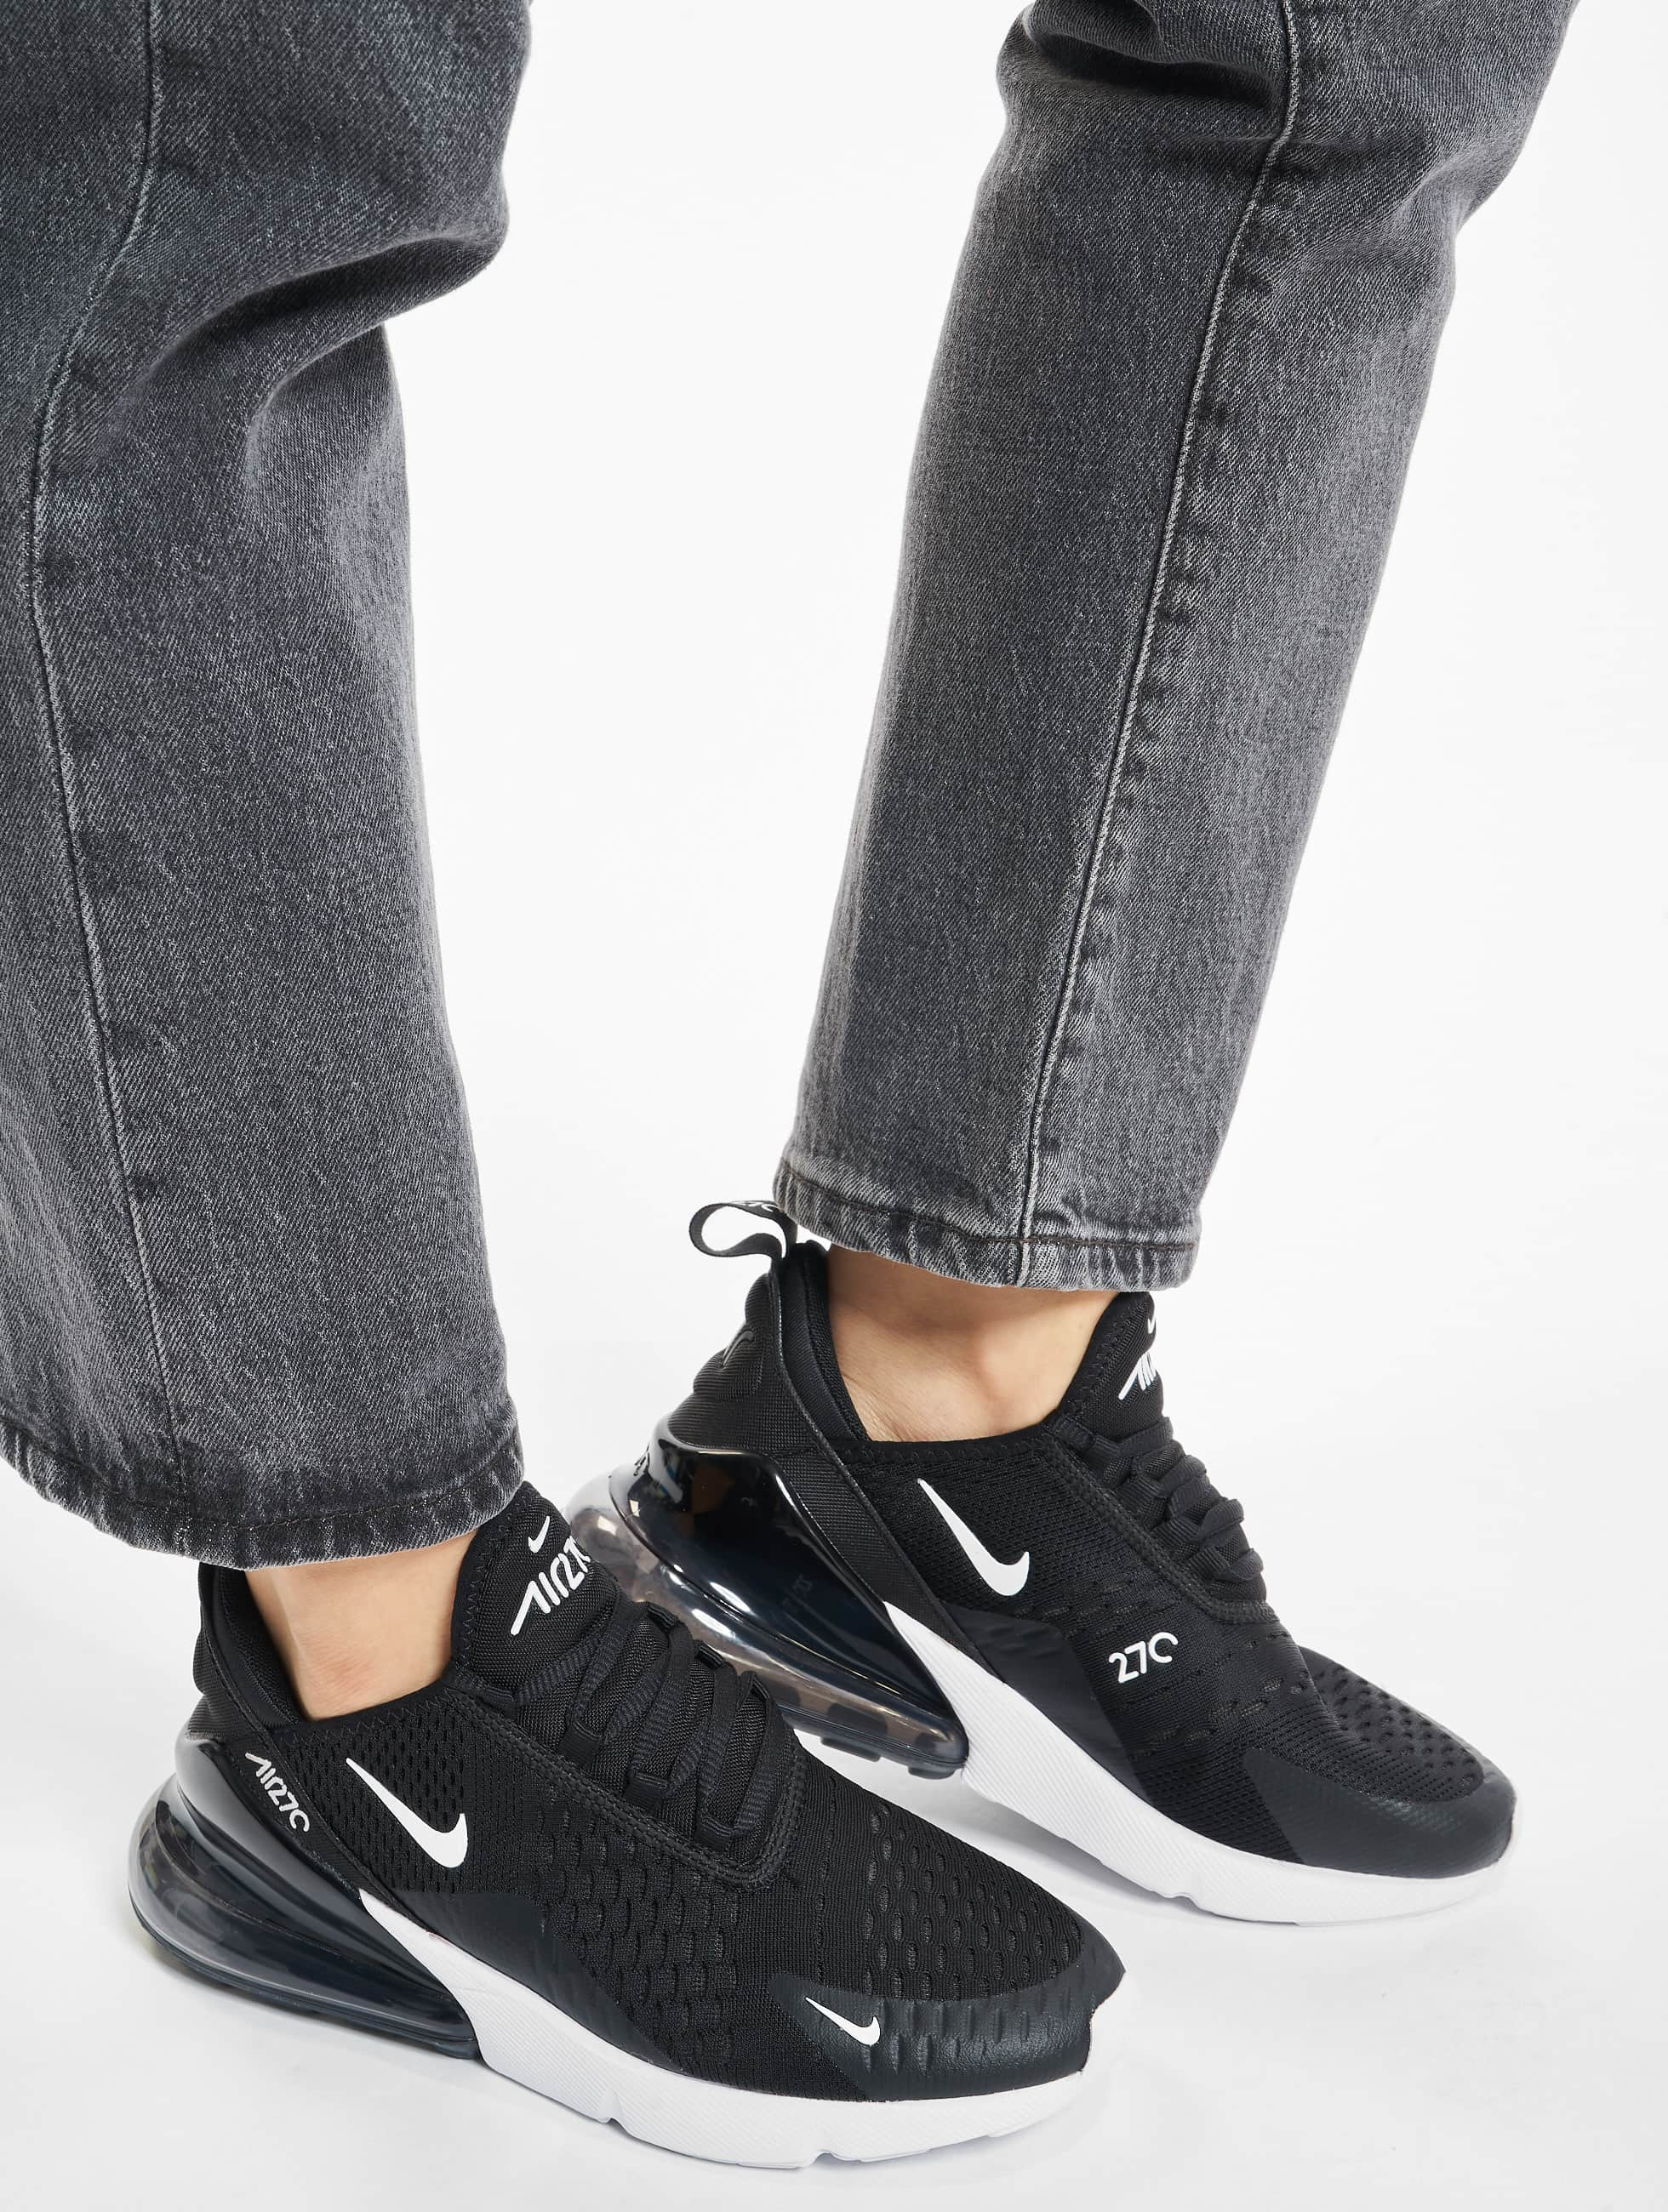 Ceniza paso escaramuza Nike Zapato / Zapatillas de deporte Air Max 270 en negro 443490